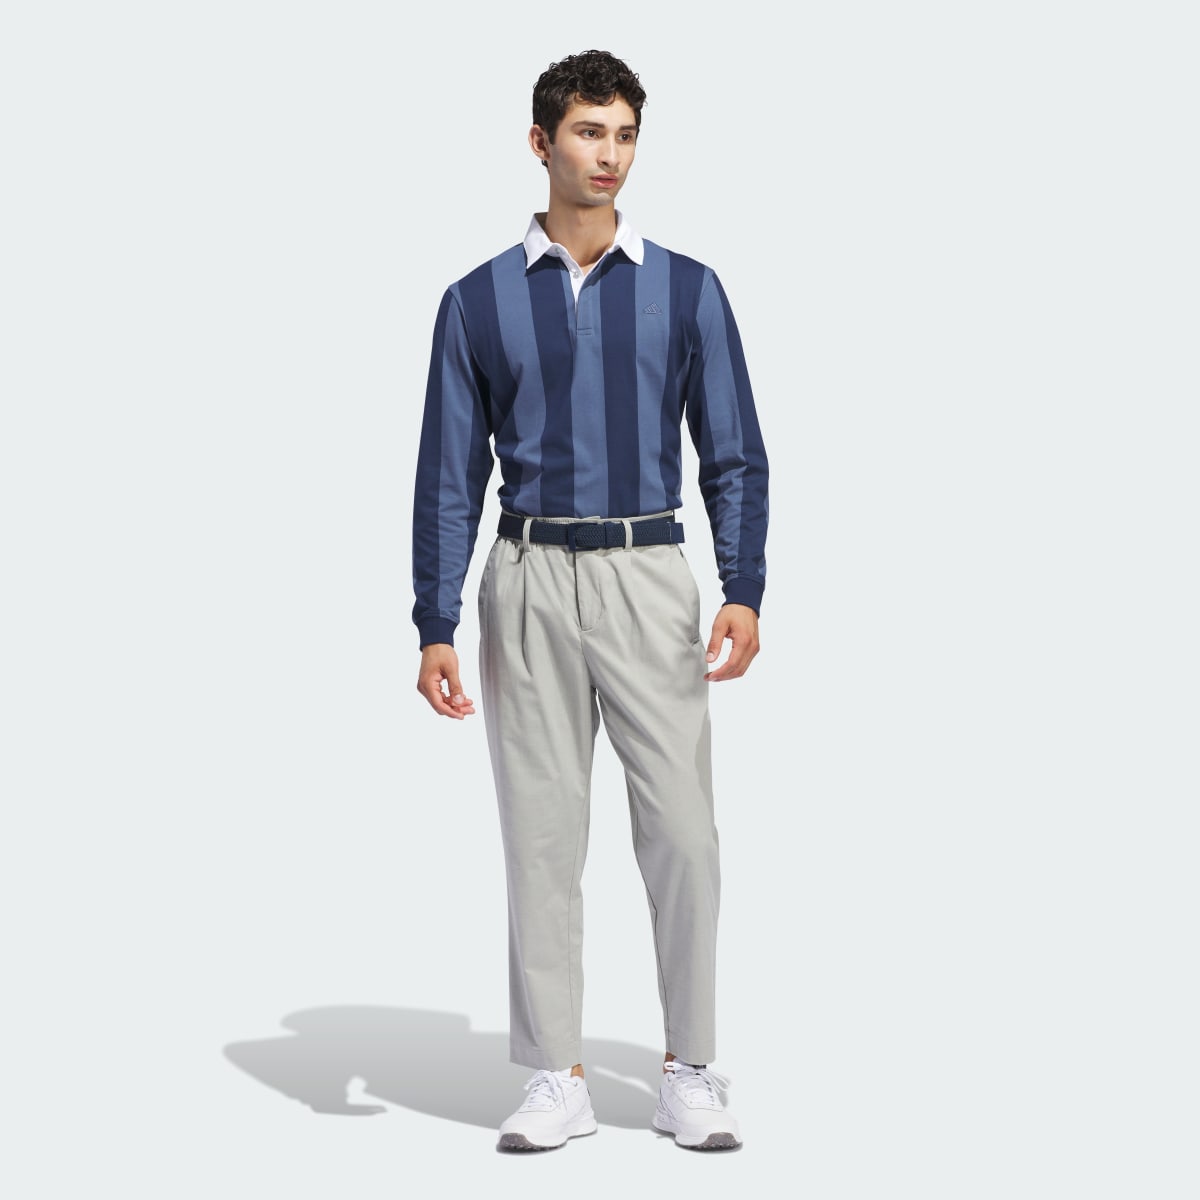 Adidas Go-To Versatile Trousers. 5